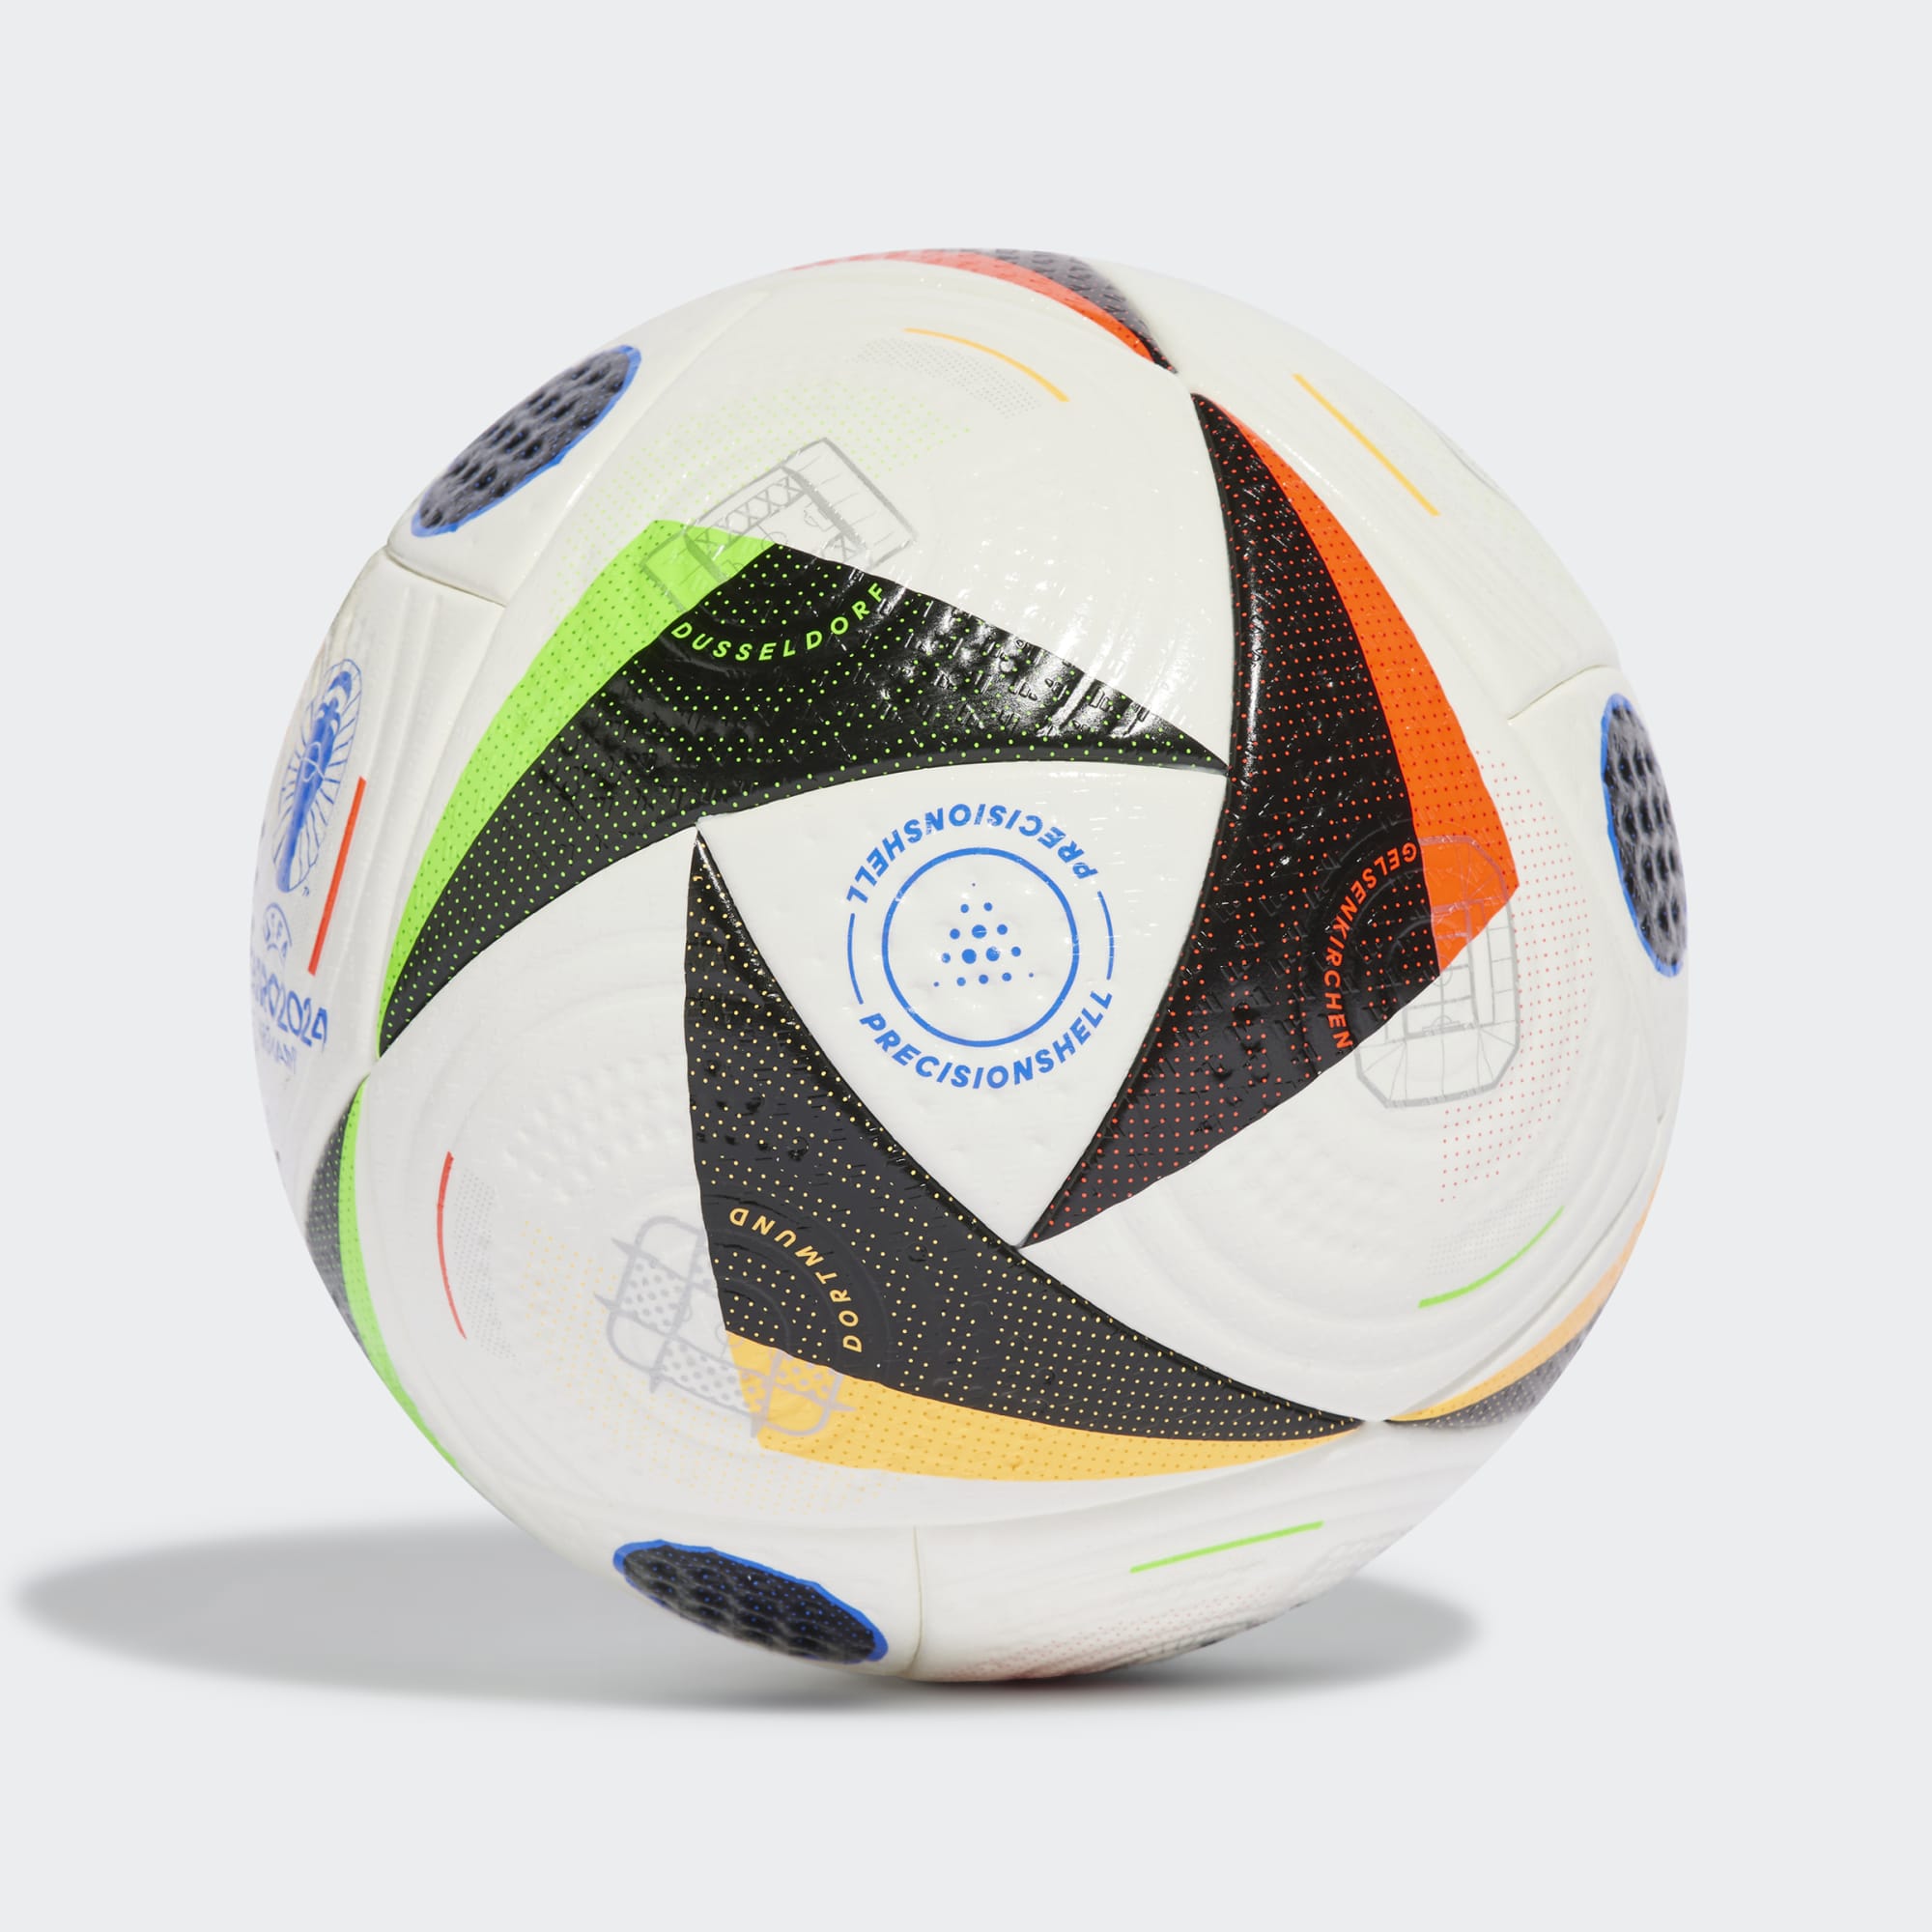 adidas UEFA Euro 2024 Pro Official Match Ball